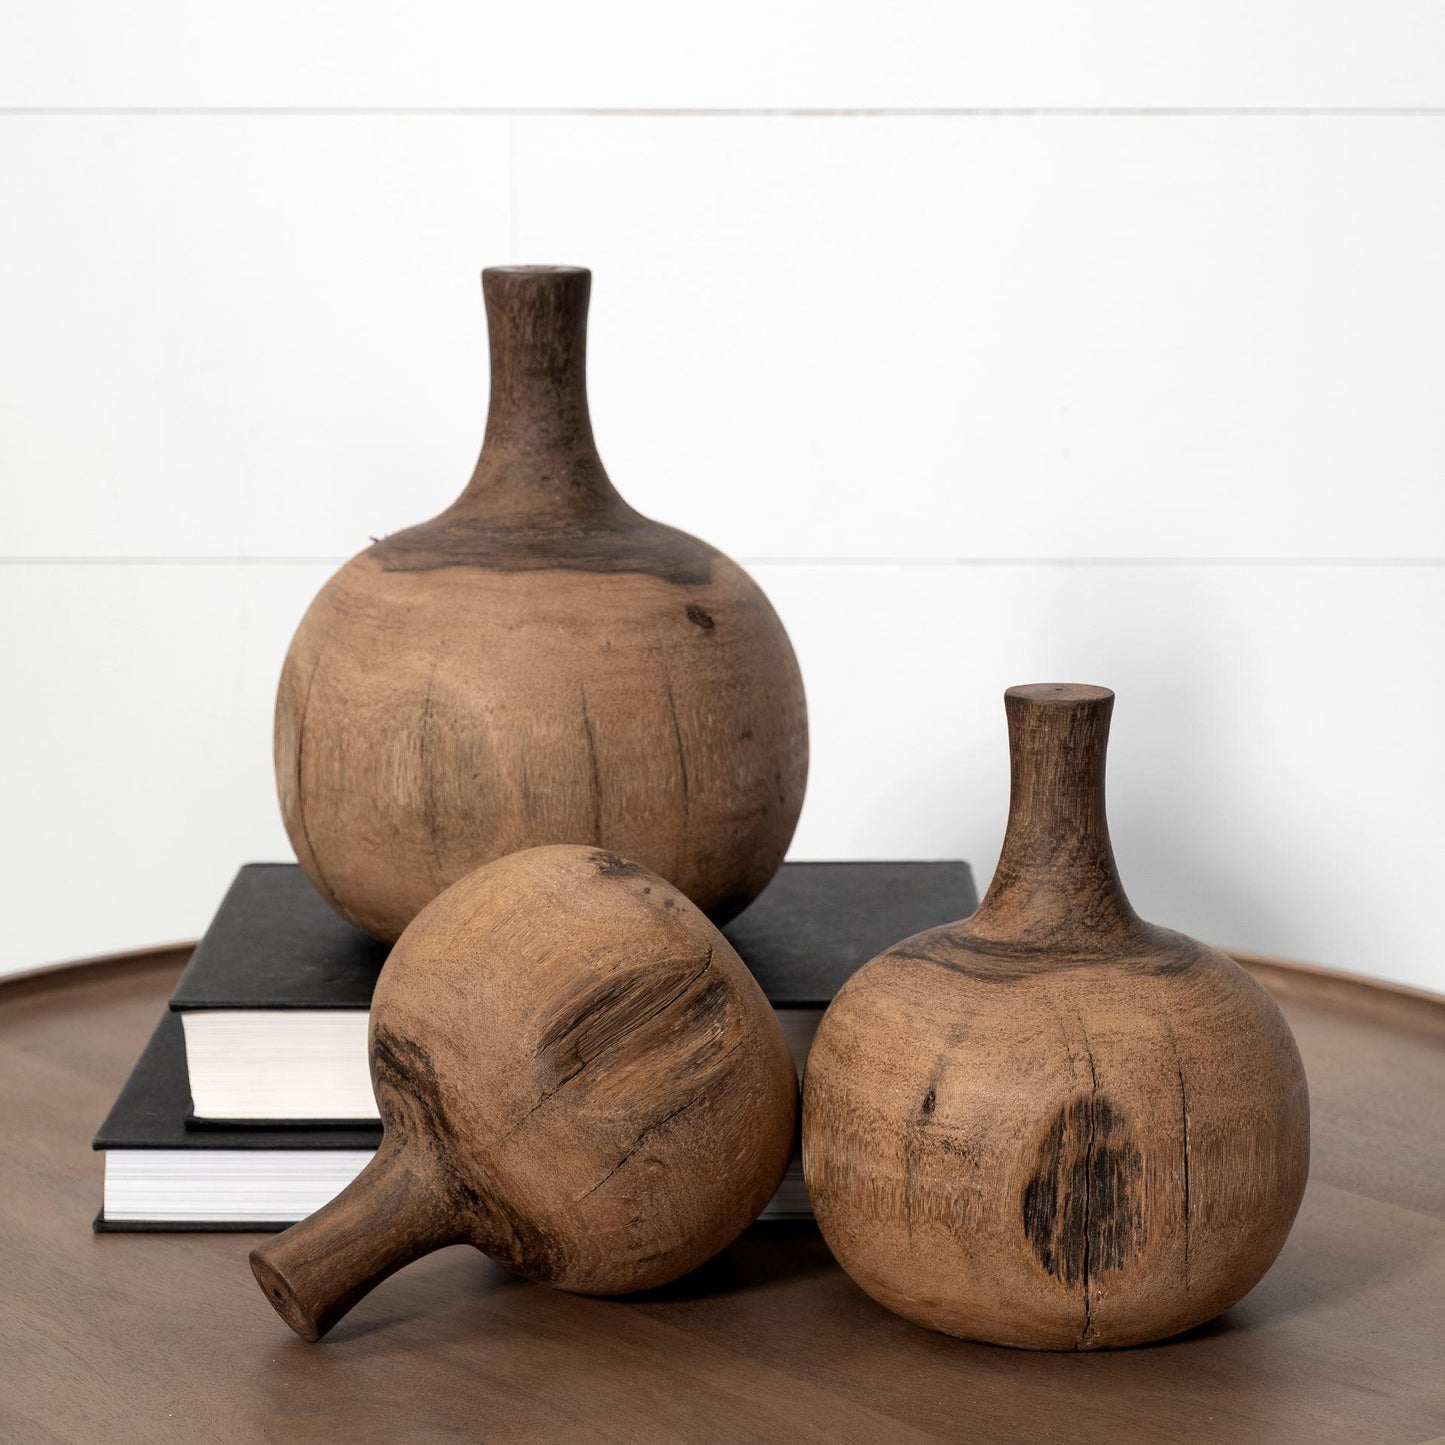 Afra Large Solid Wood Vase Shaped Decorative Object